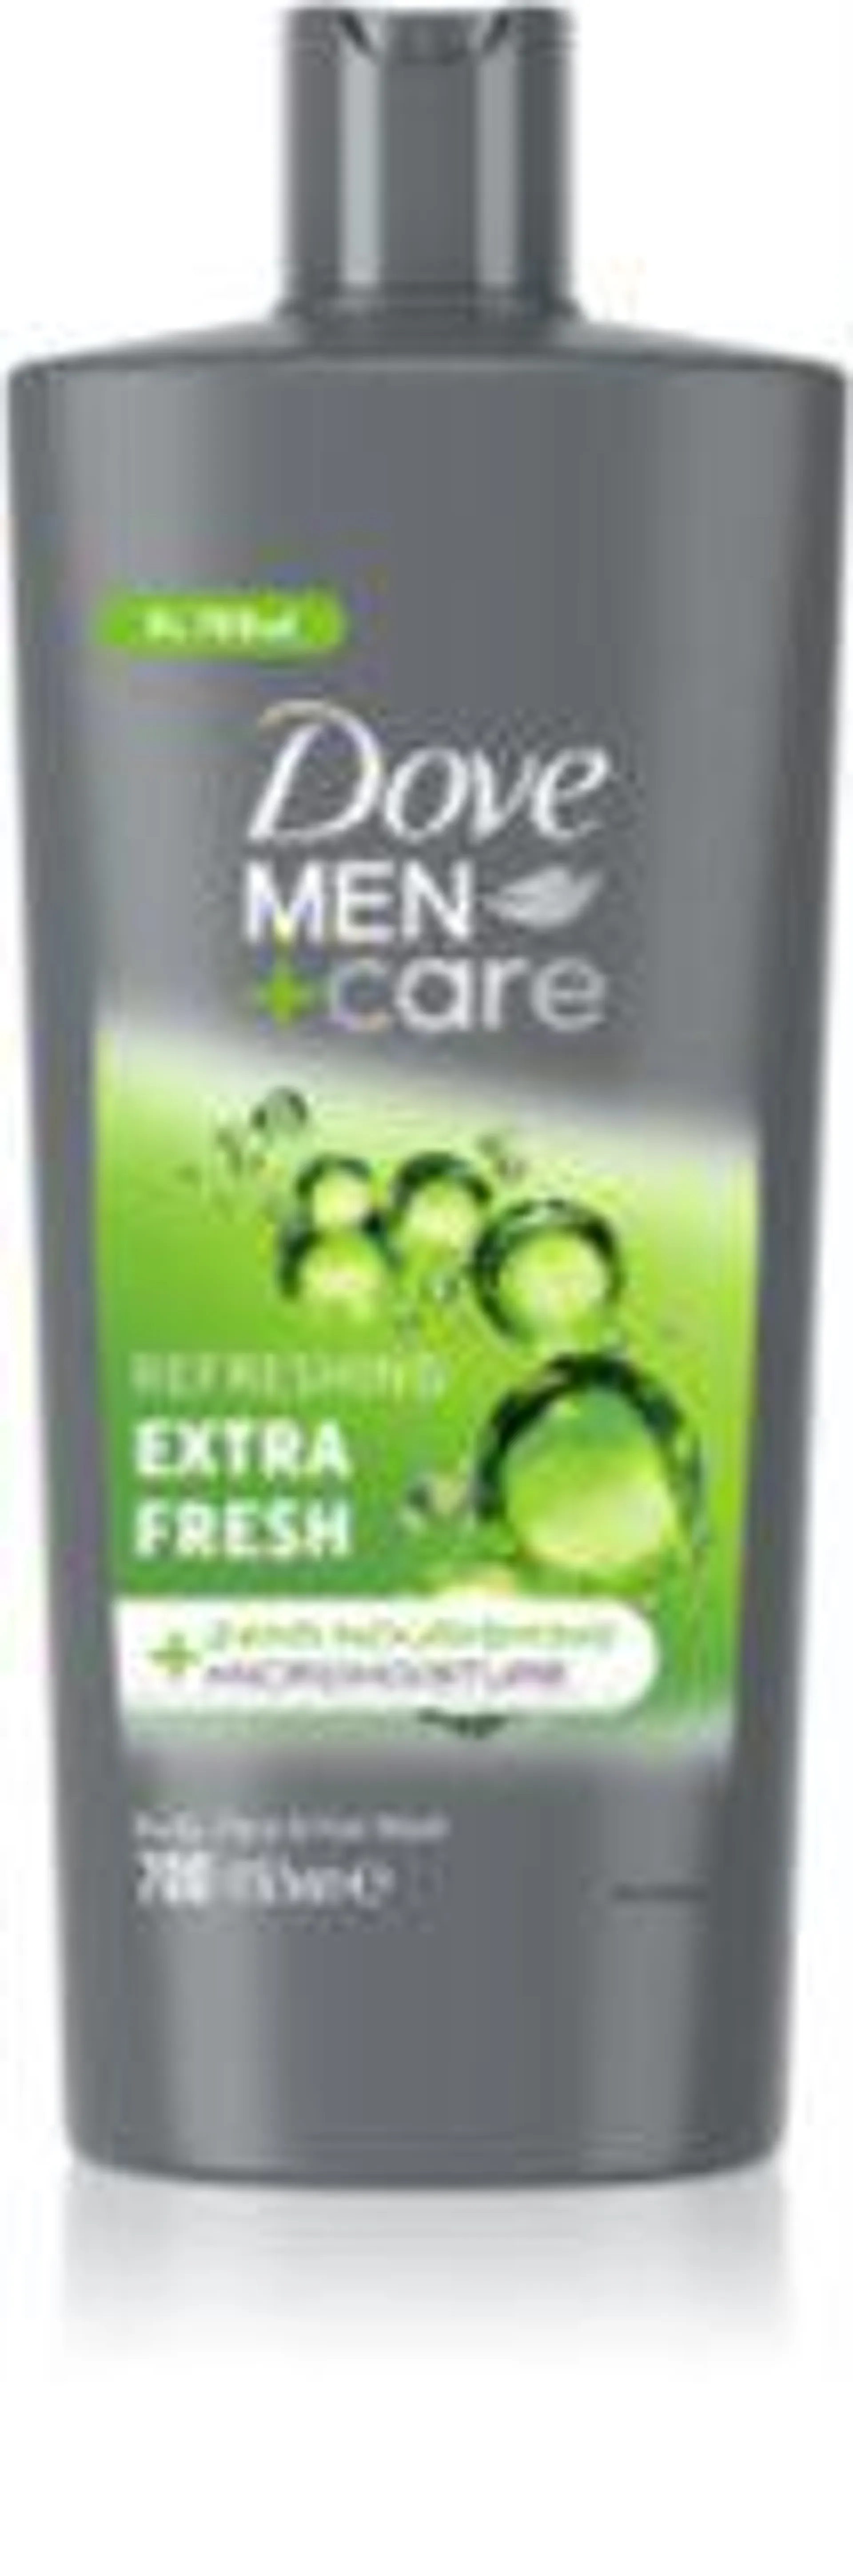 Men+Care Extra Fresh